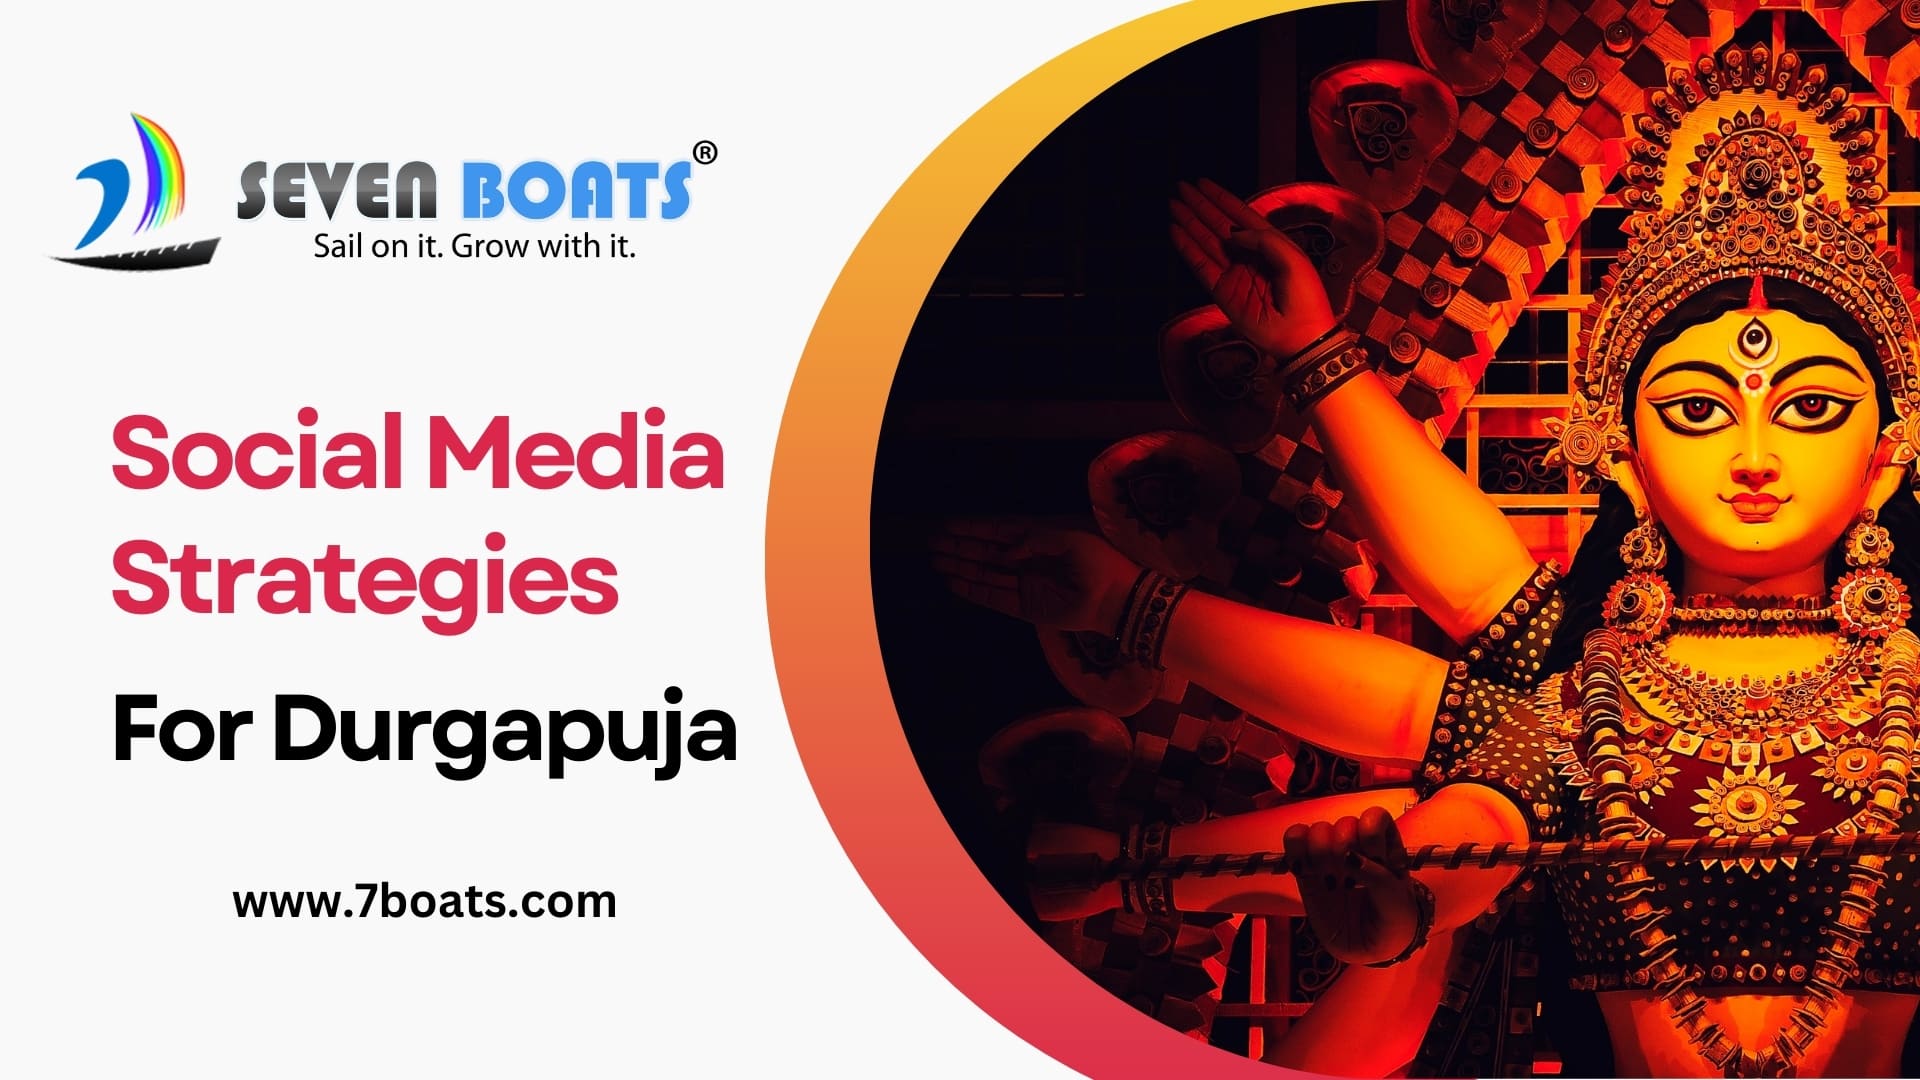 Social Media Strategies for Durga Puja